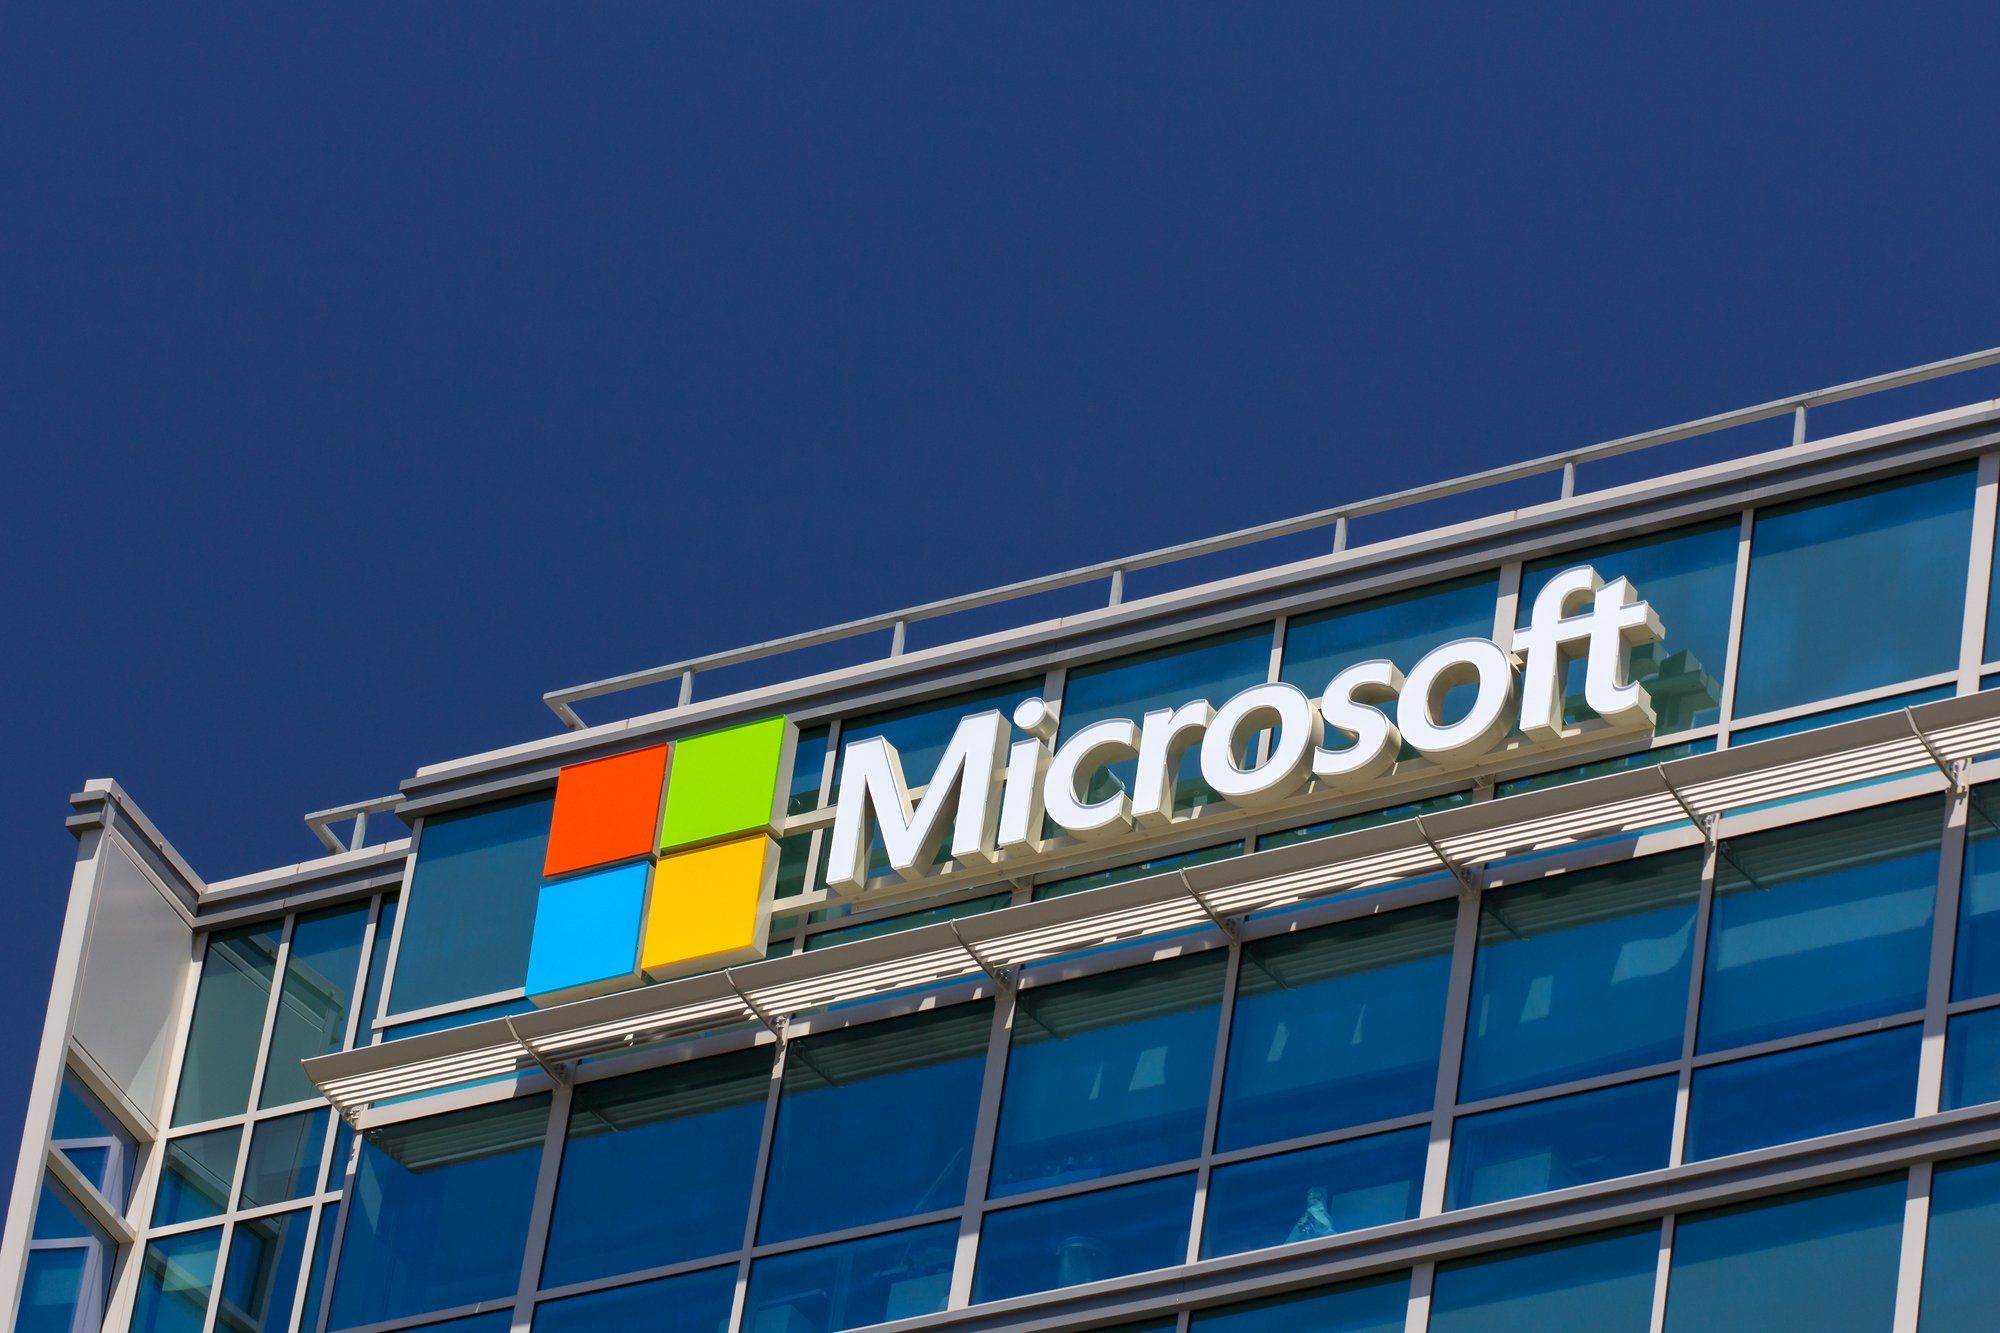 Microsoft building regarding the Microsoft settlement